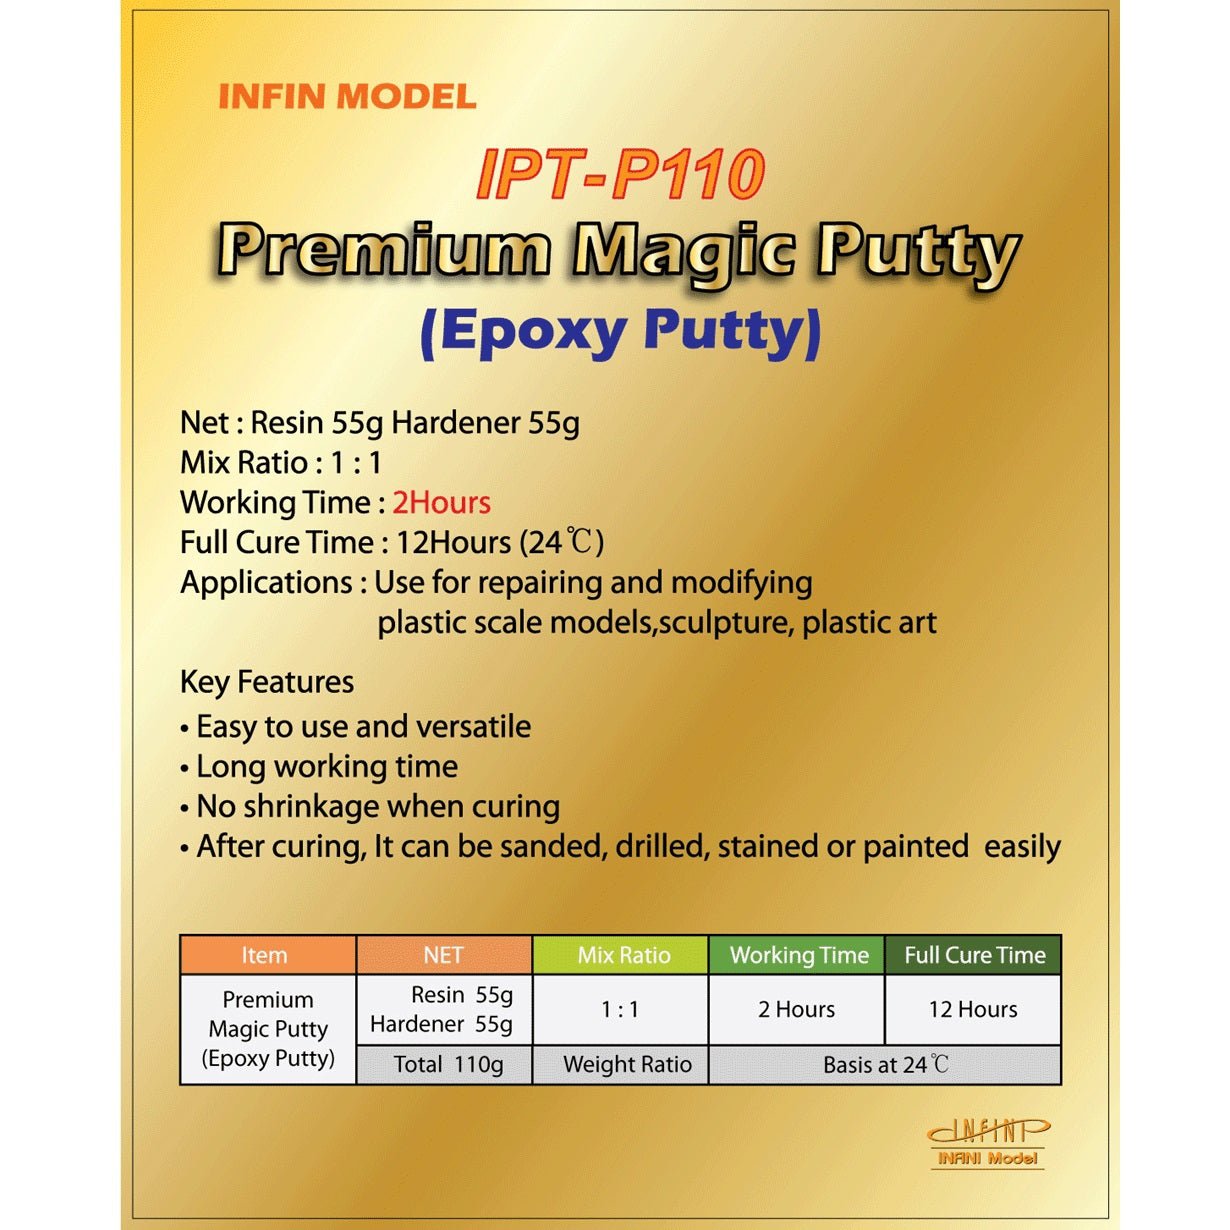 INFINI Model Premium Magic Epoxy Putty